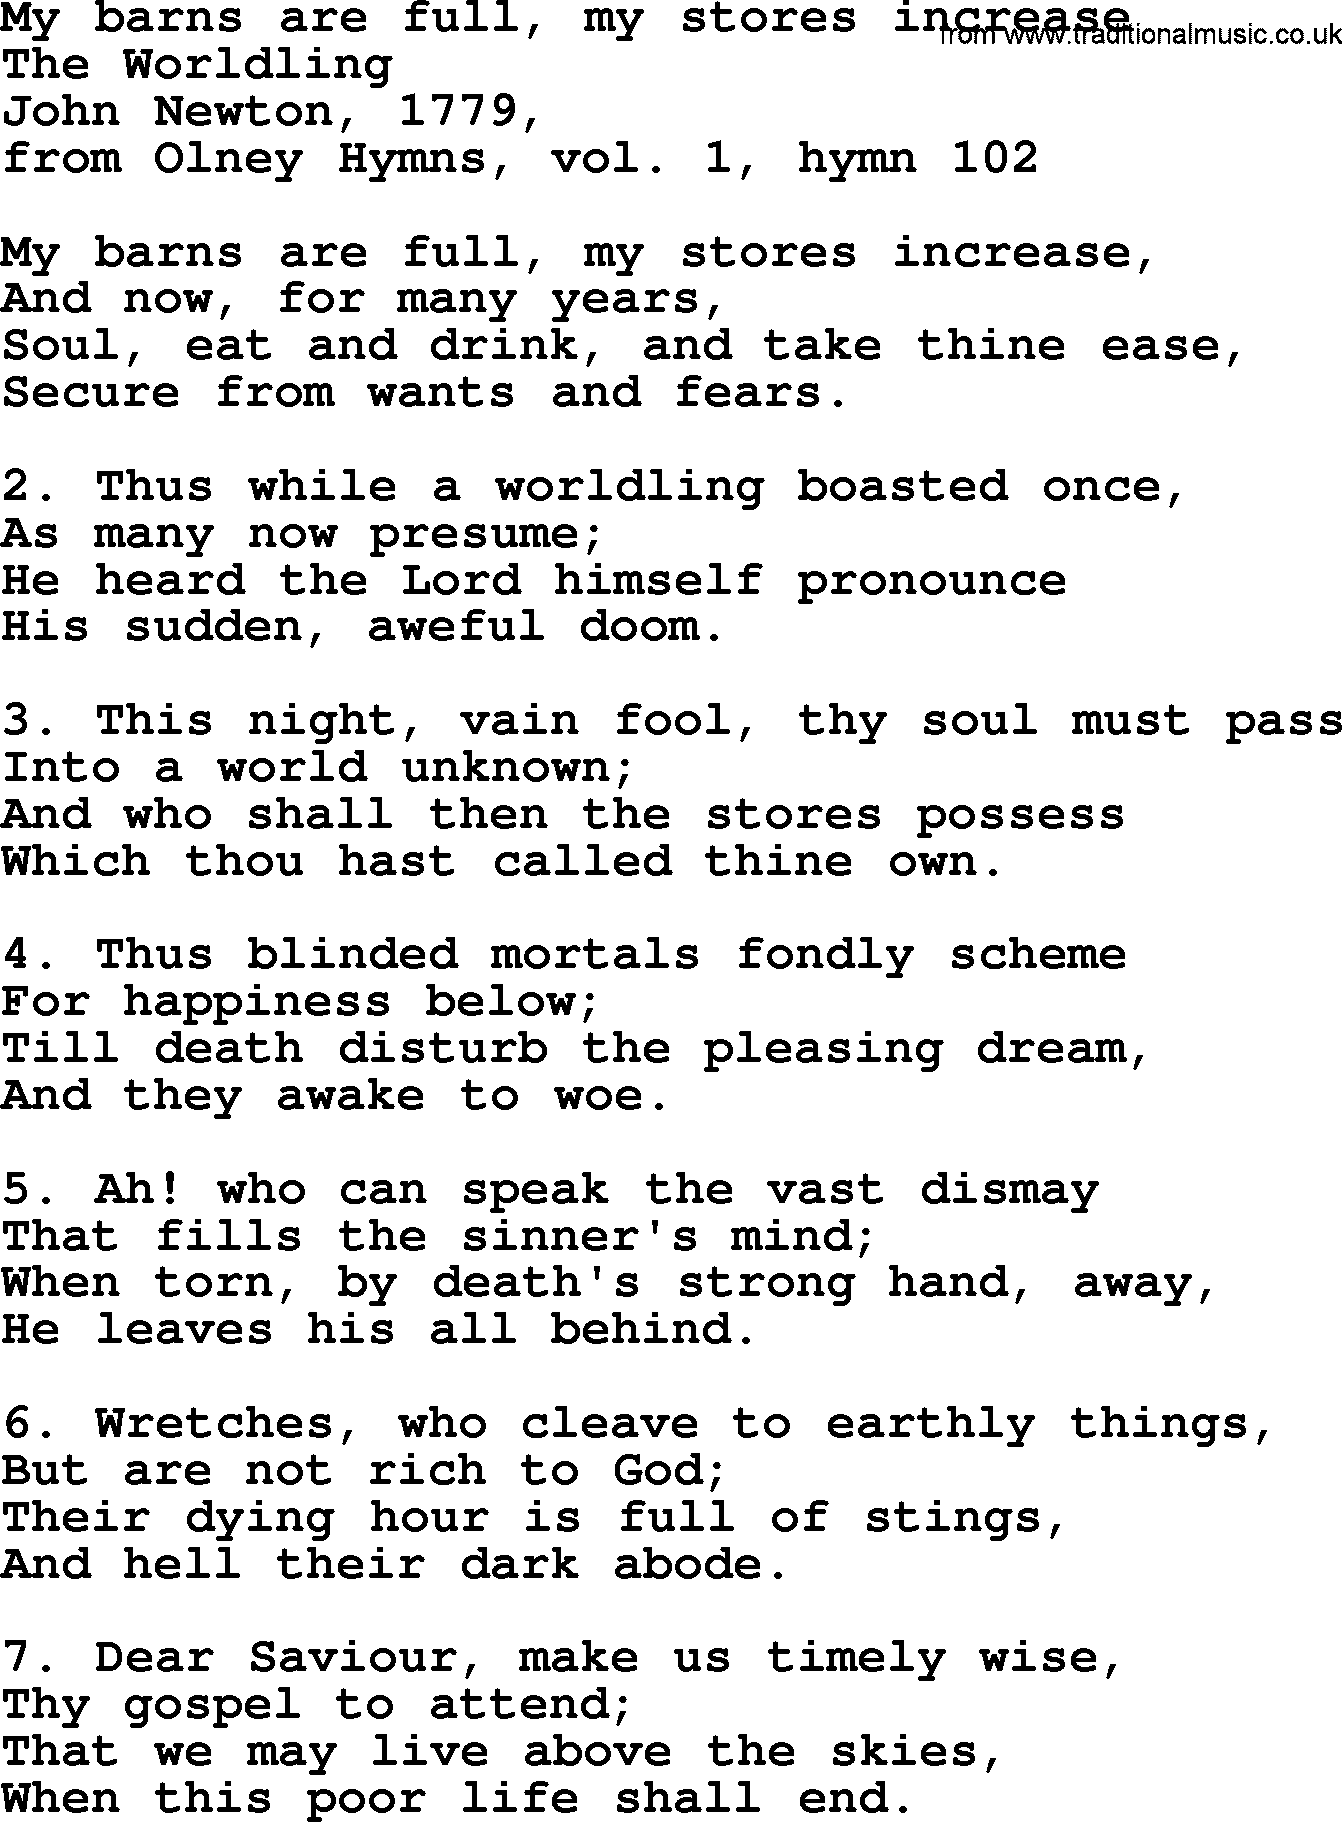 John Newton hymn: My Barns Are Full, My Stores Increase, lyrics